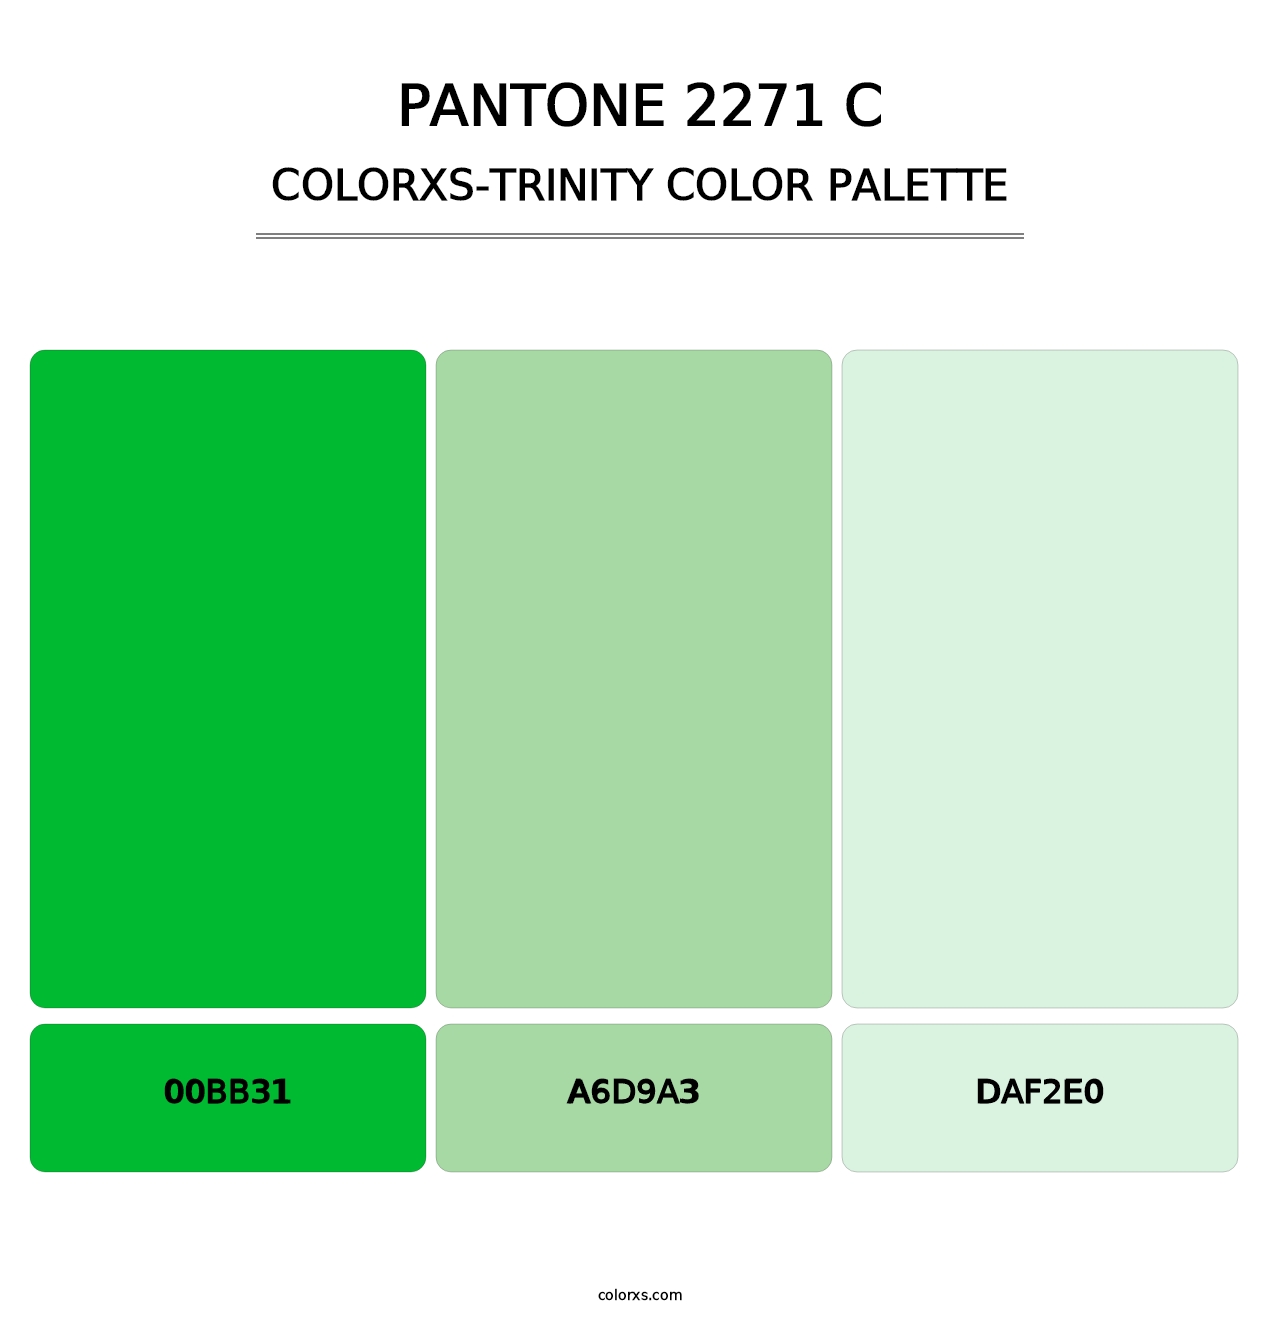 PANTONE 2271 C - Colorxs Trinity Palette